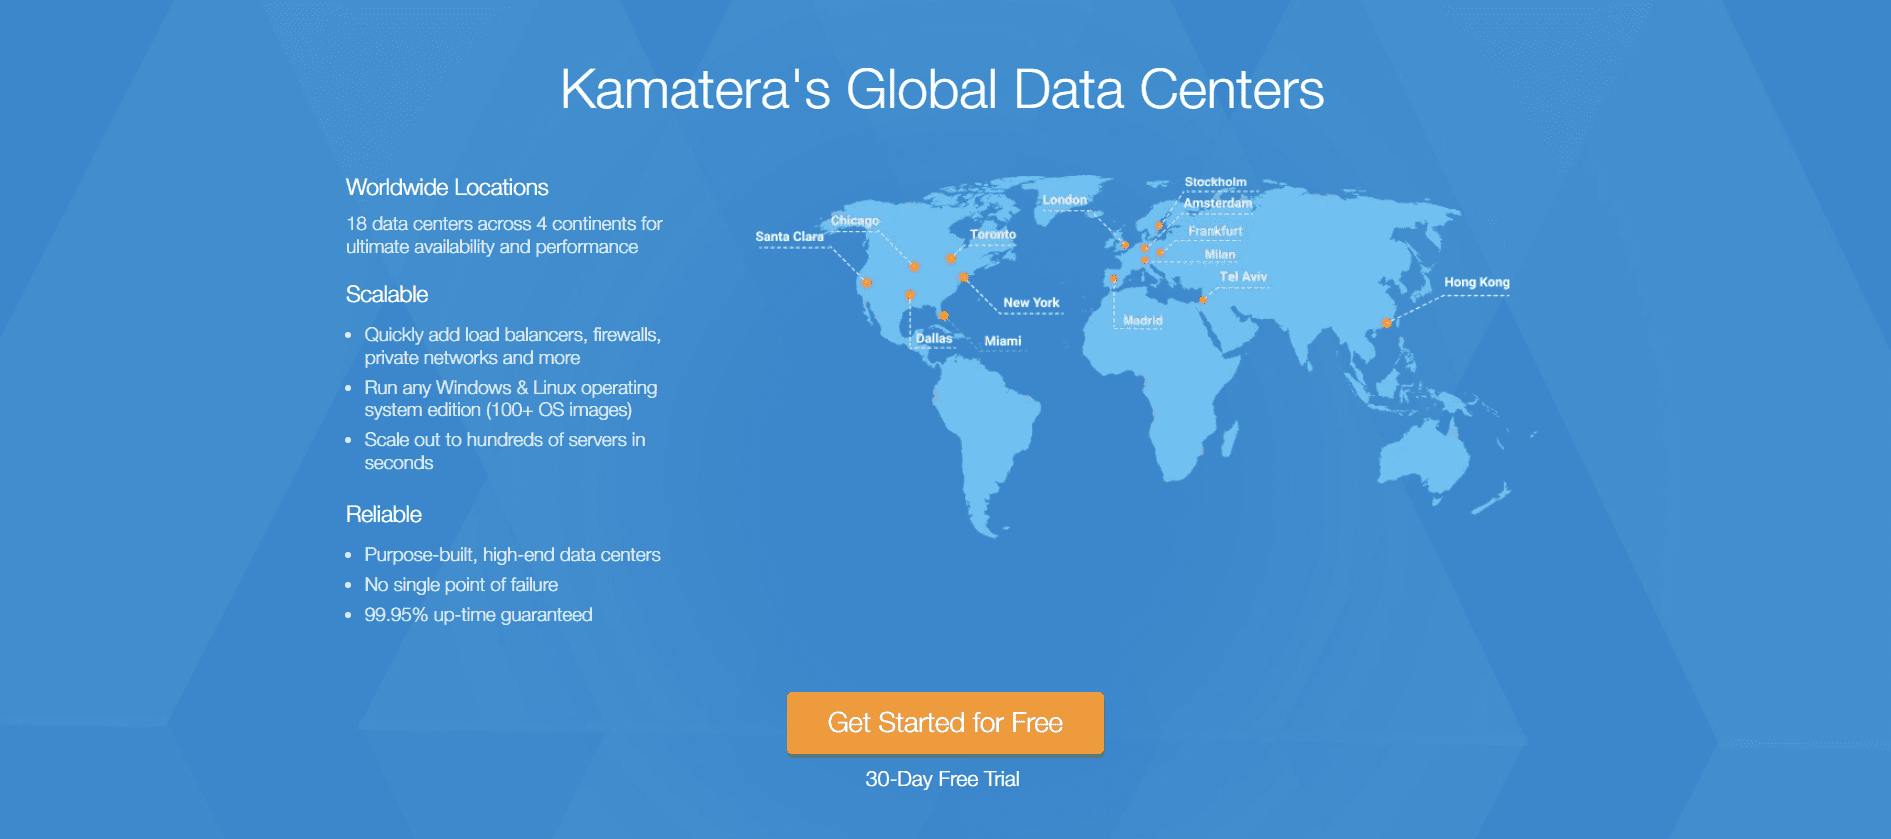 Kamatera’s data centers